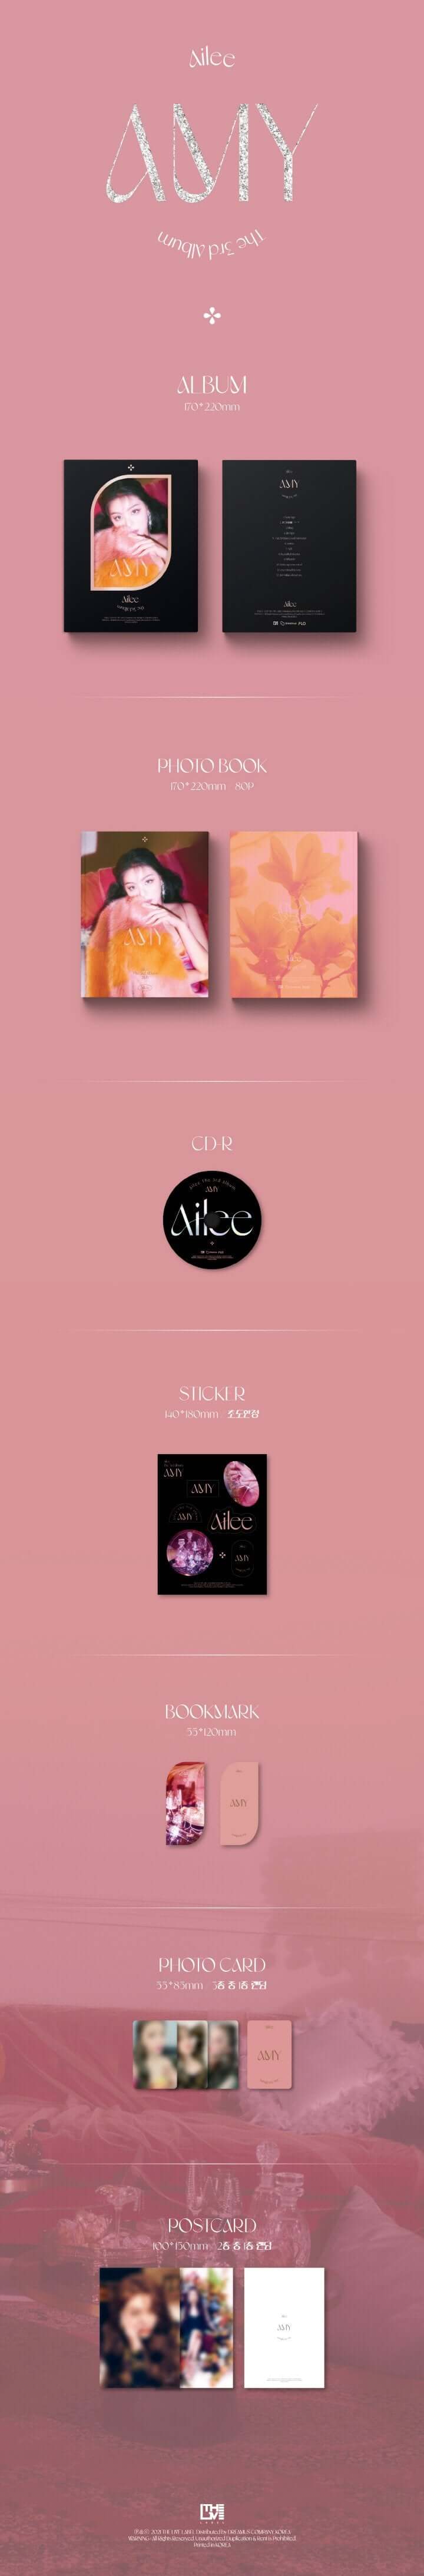 Ailee - Amy (tercer álbum)